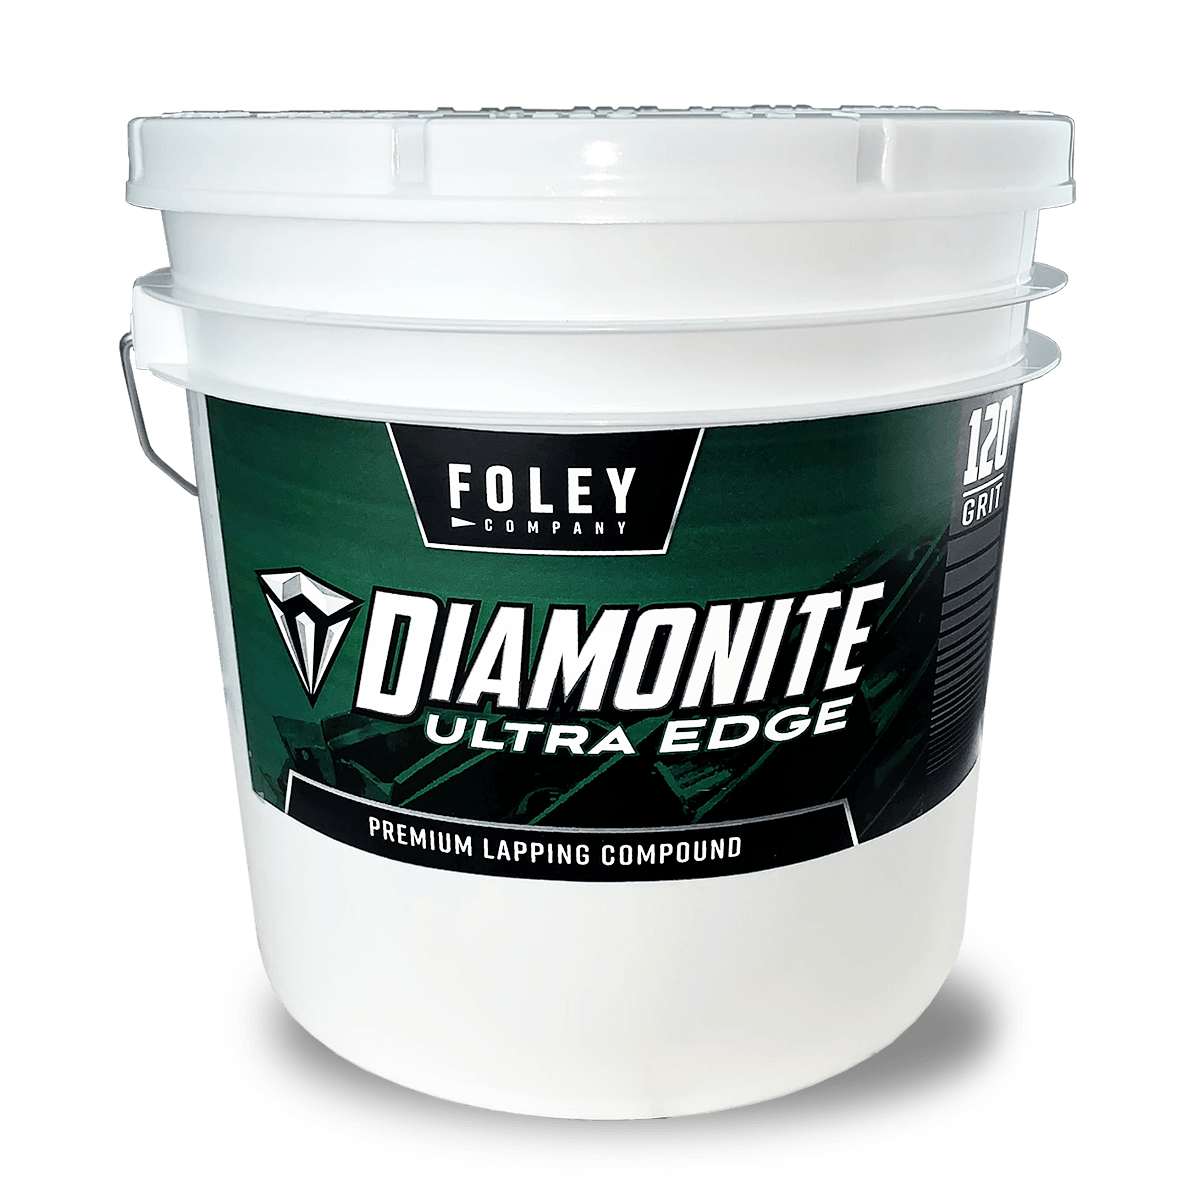 Foley Diamonite Ultra Edge Premium Lapping Compound 120 Grit